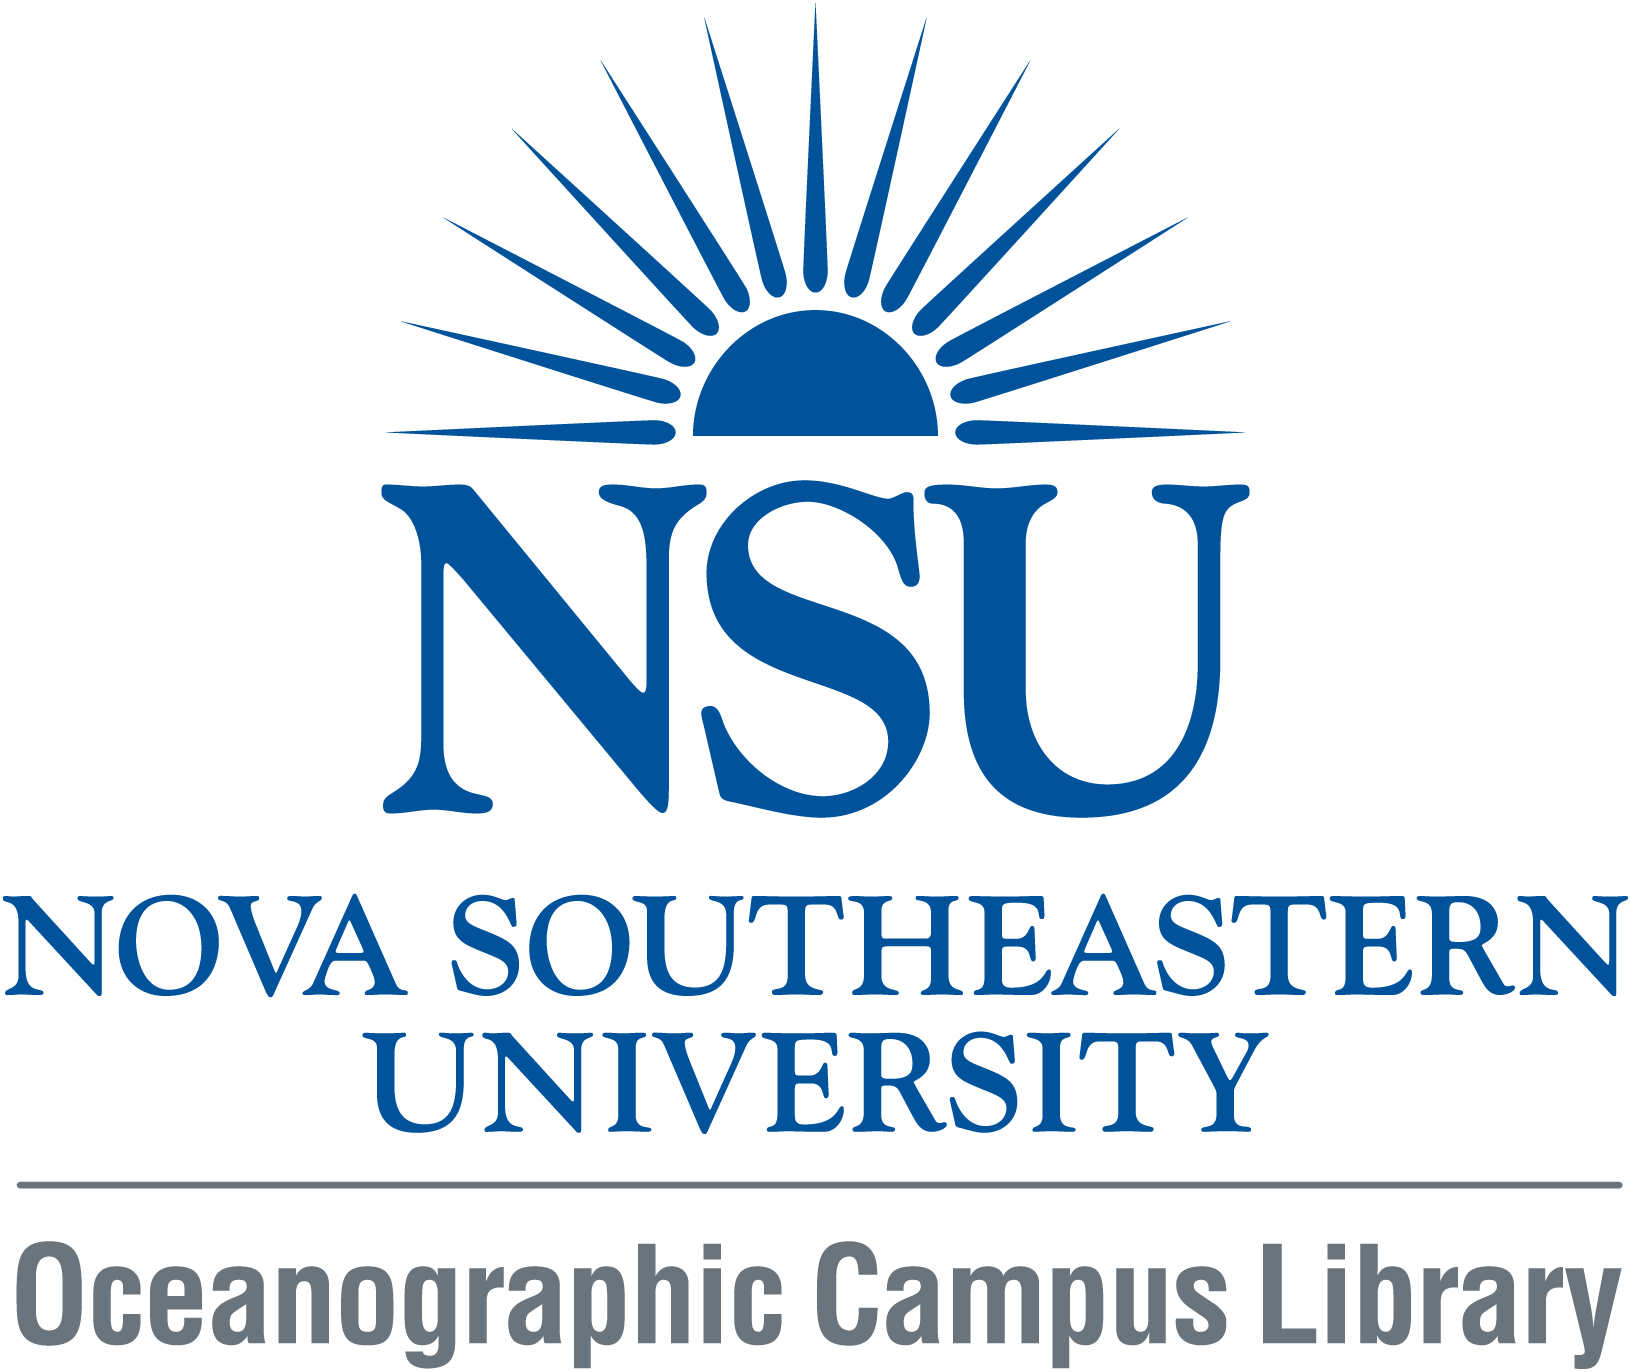 Oceanographic Campus Library Square Logo - Nova Southeastern University Optometry (1631x1372)